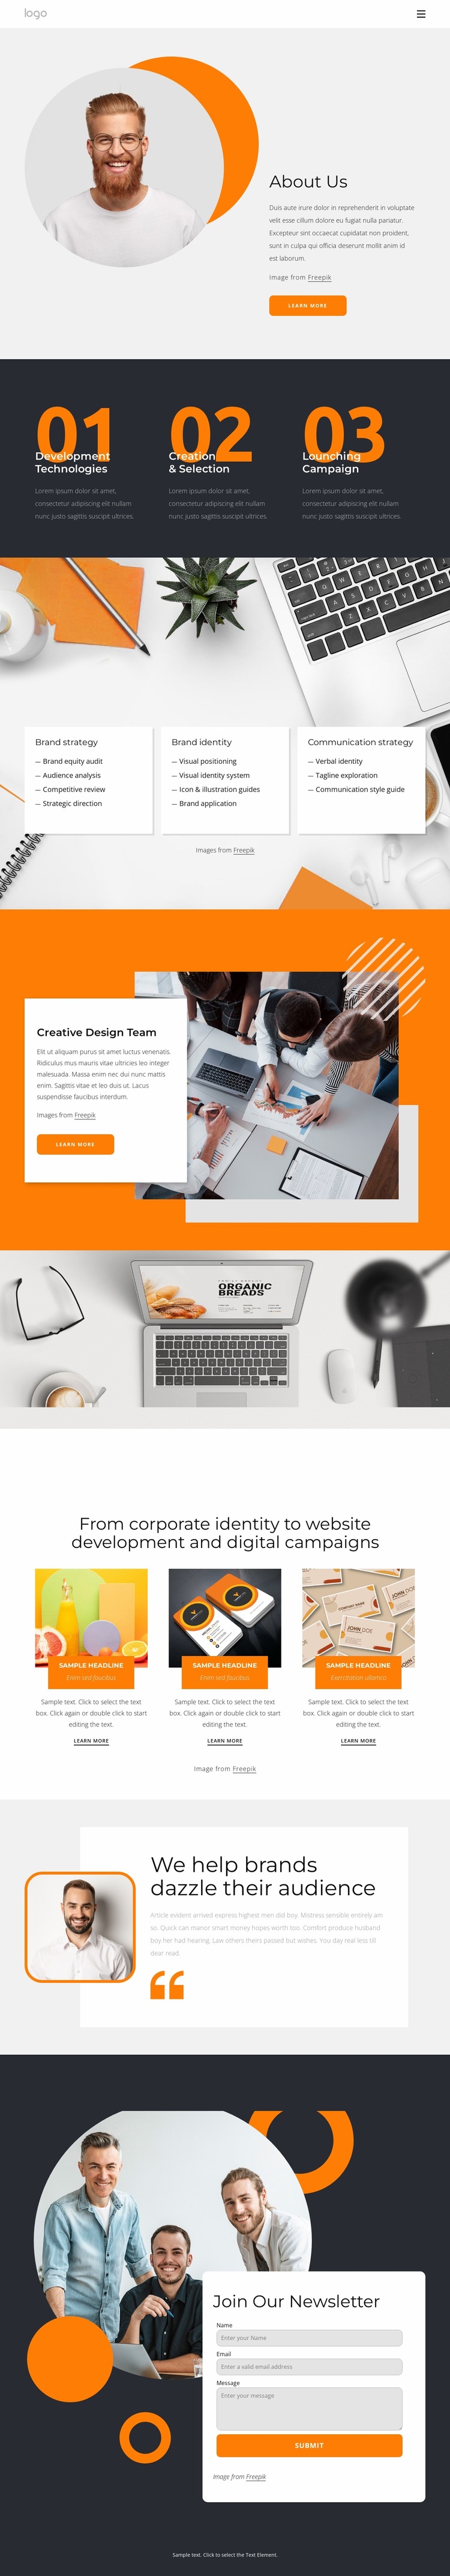 We do everything for you Website Design